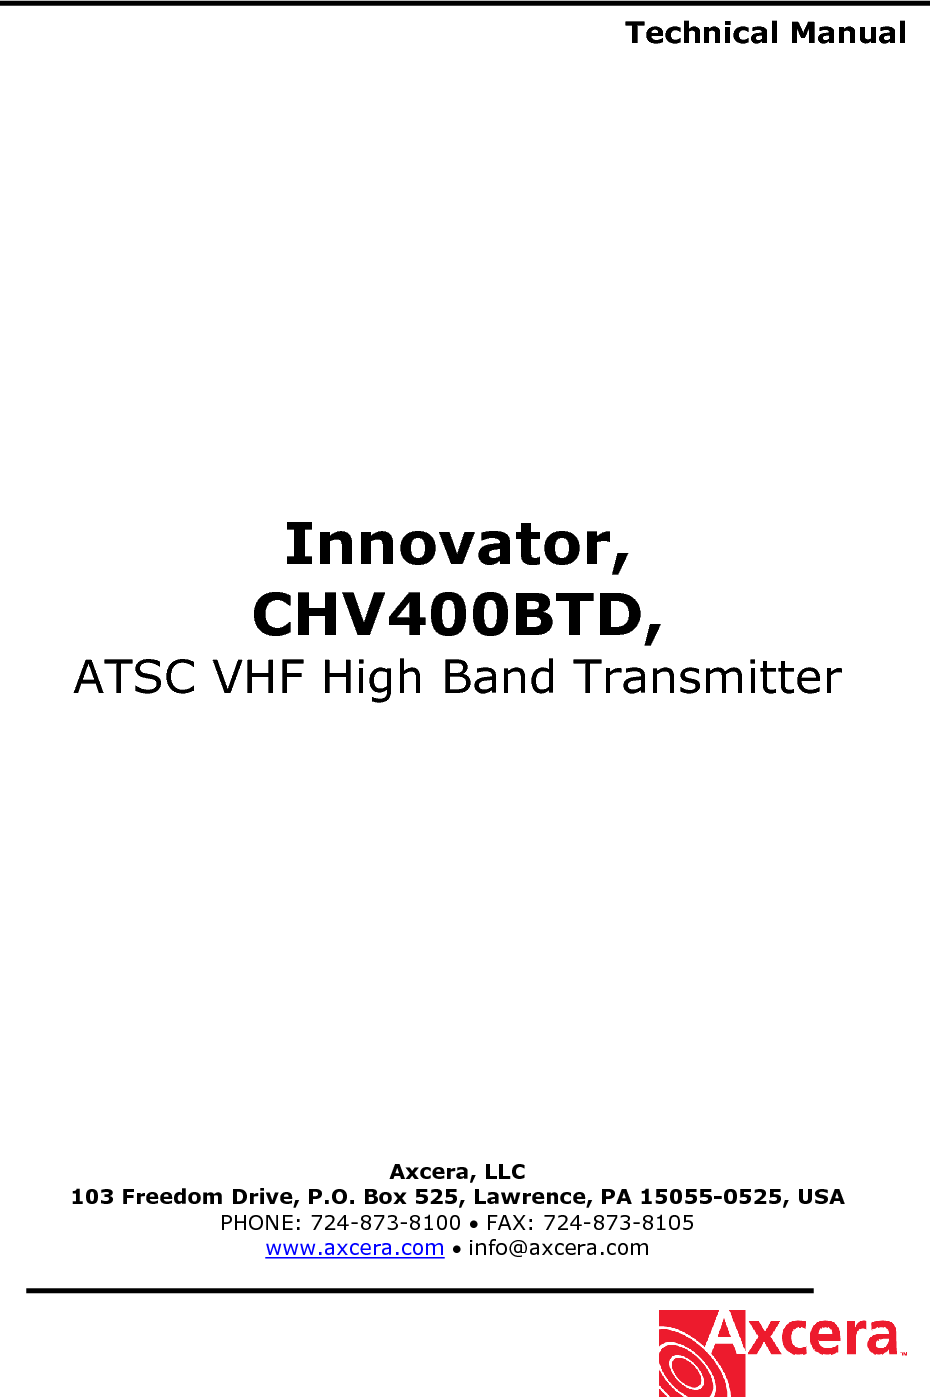  Technical Manual                   Innovator, CHV400BTD, ATSC VHF High Band Transmitter                   Axcera, LLC 103 Freedom Drive, P.O. Box 525, Lawrence, PA 15055-0525, USA PHONE: 724-873-8100 • FAX: 724-873-8105 www.axcera.com • info@axcera.com     